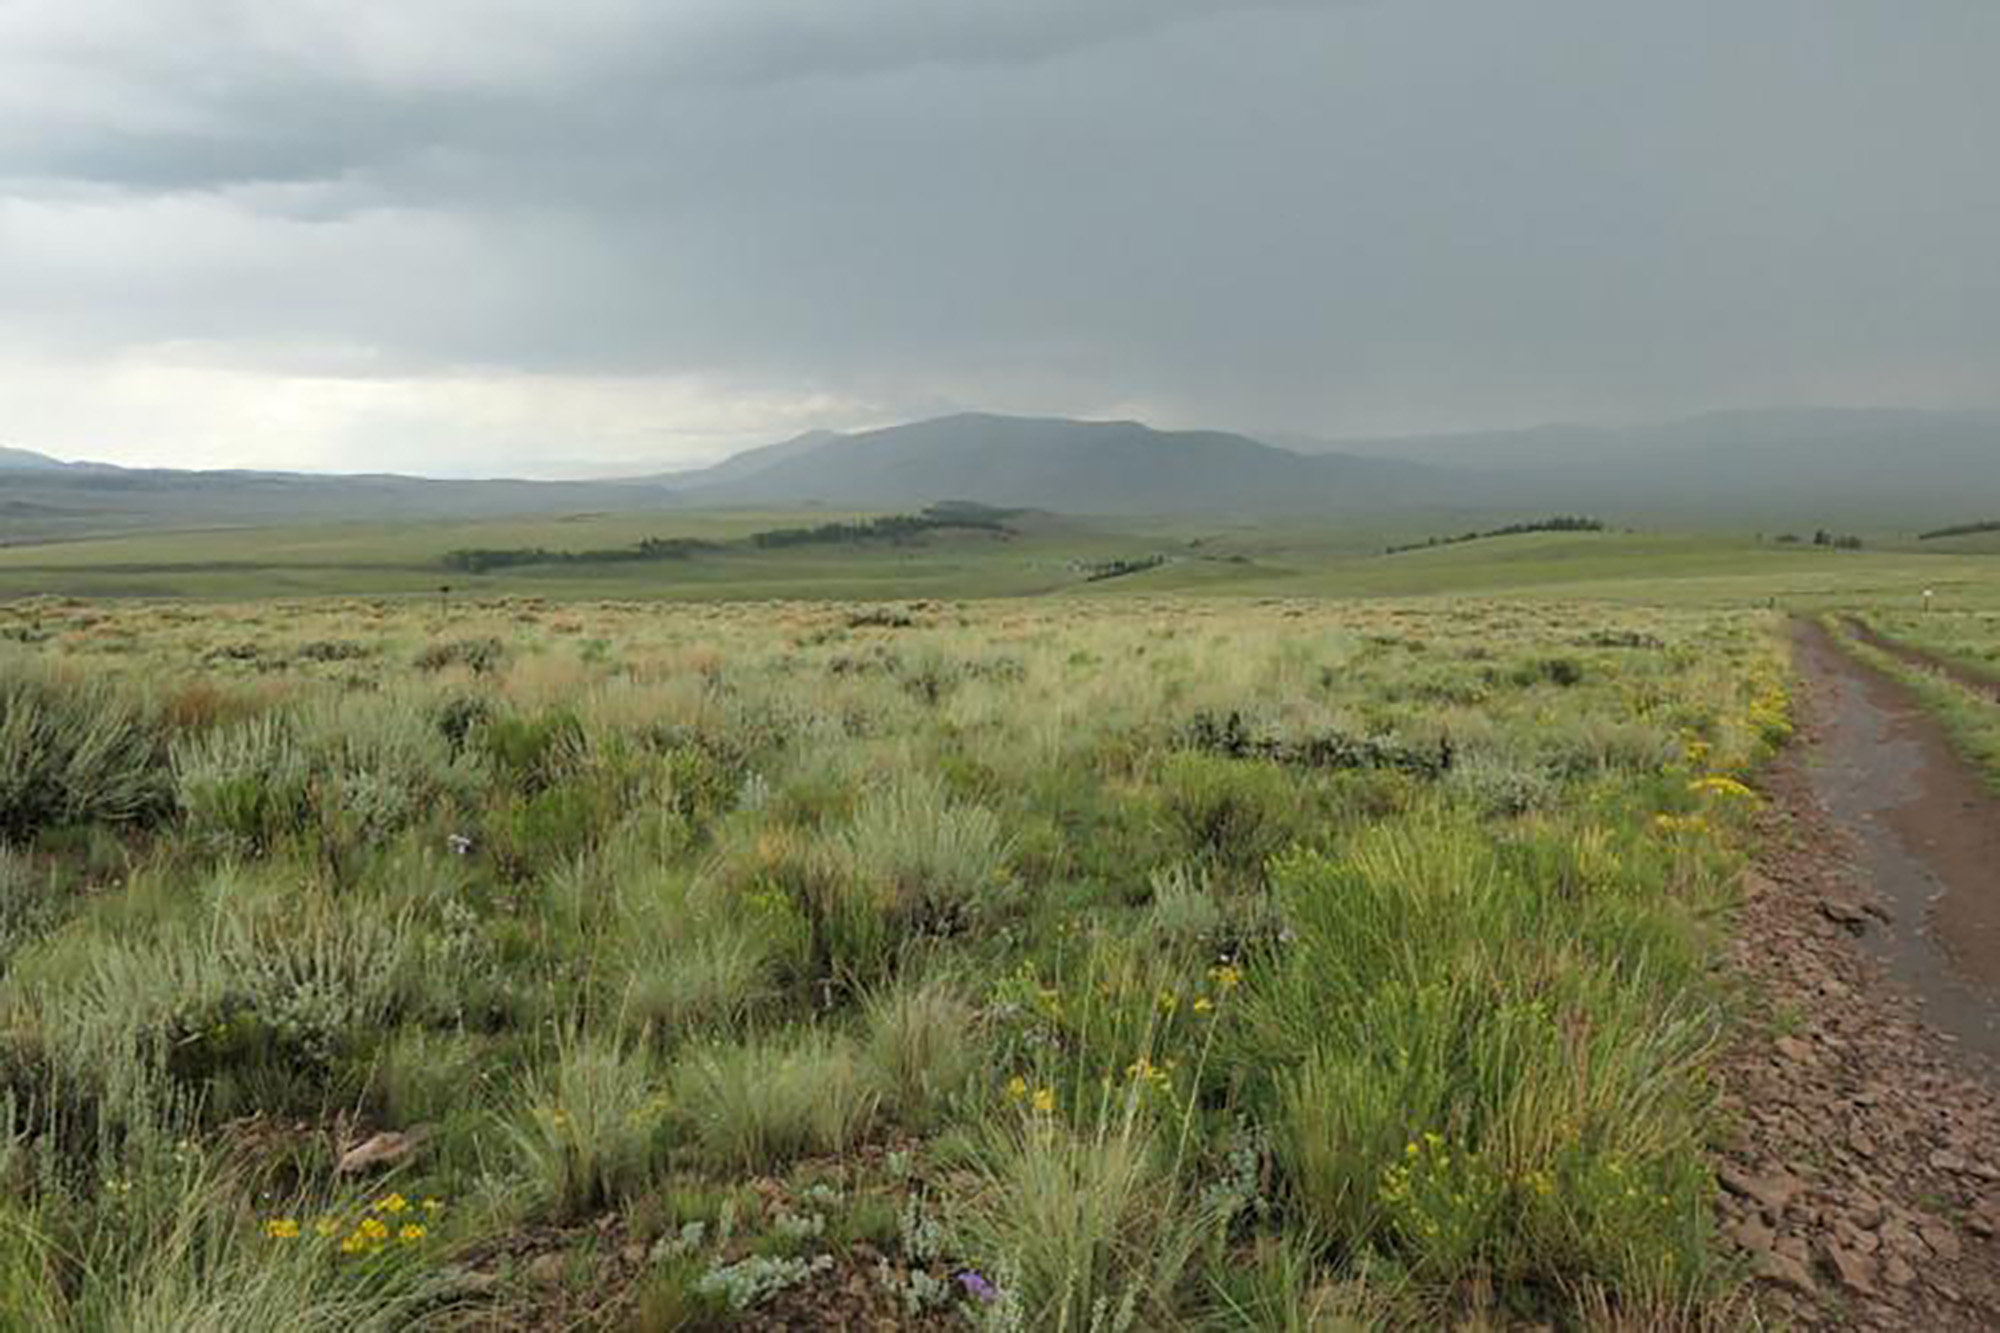 A scene India Wood captured during her perilous walk around Colorado's San Juan Mountain. 